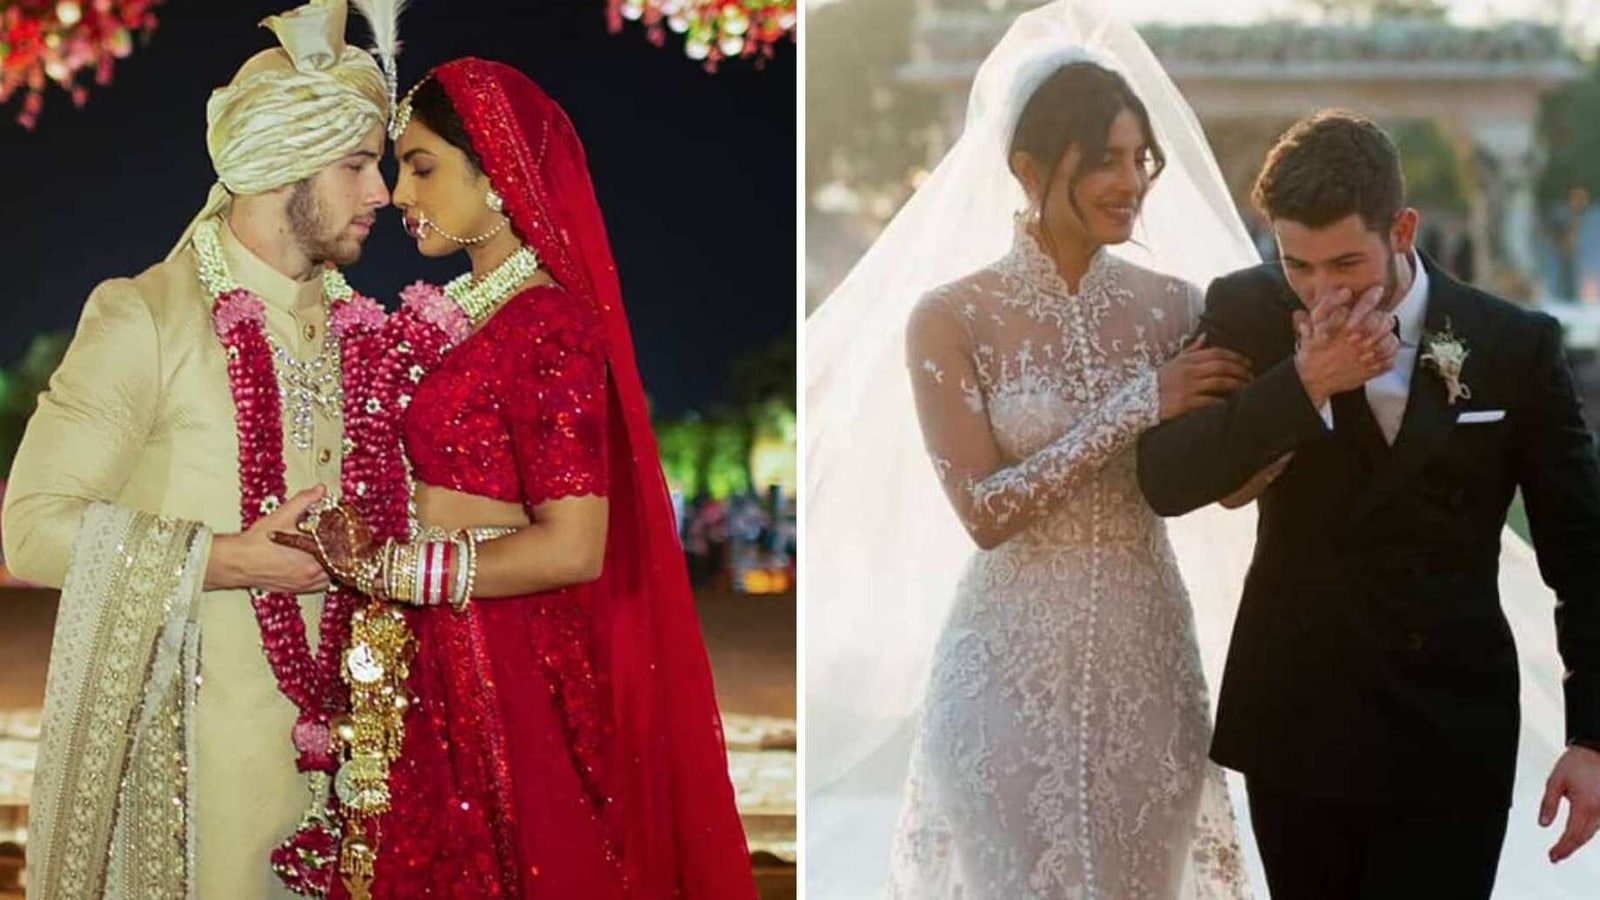 Priyanka Chopra Nick Jonas wedding pictures: All you need to know